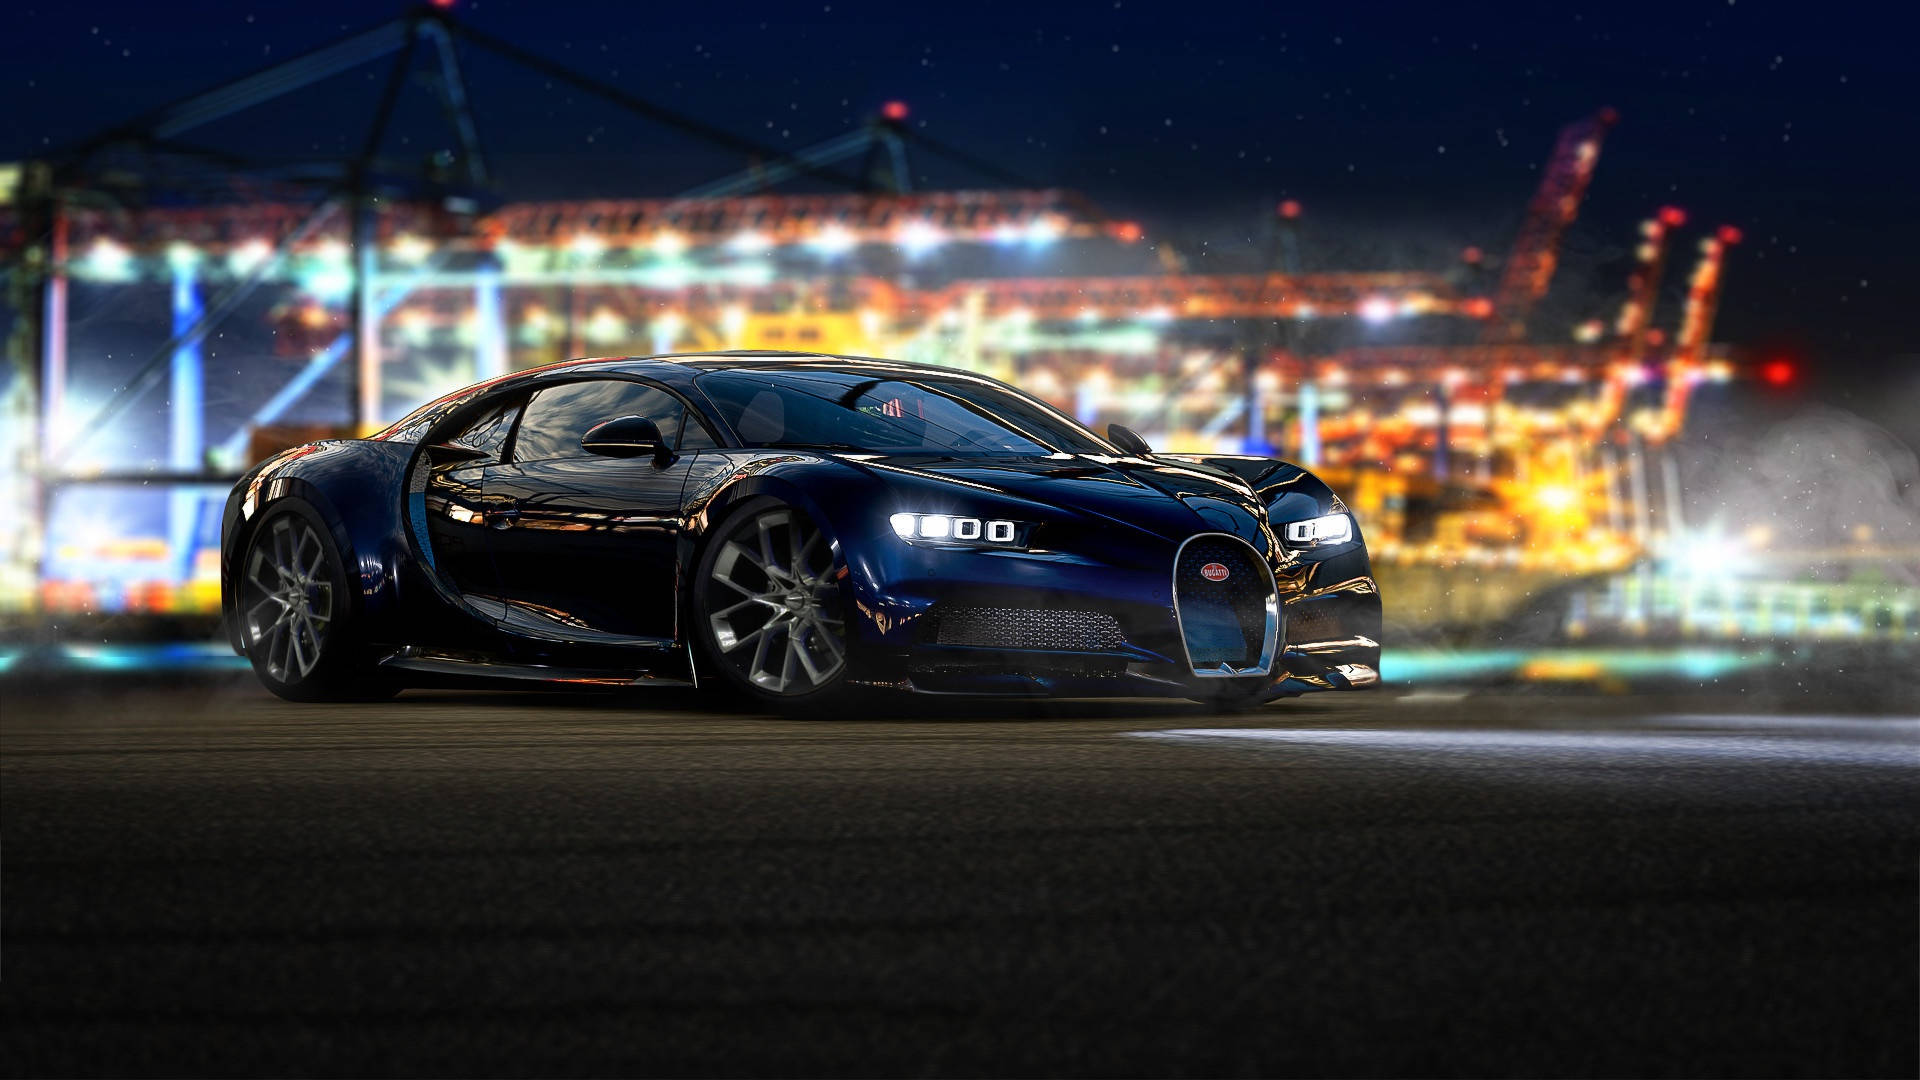 Stunning Black Bugatti Chiron in Forza Motorsport 7 Wallpaper